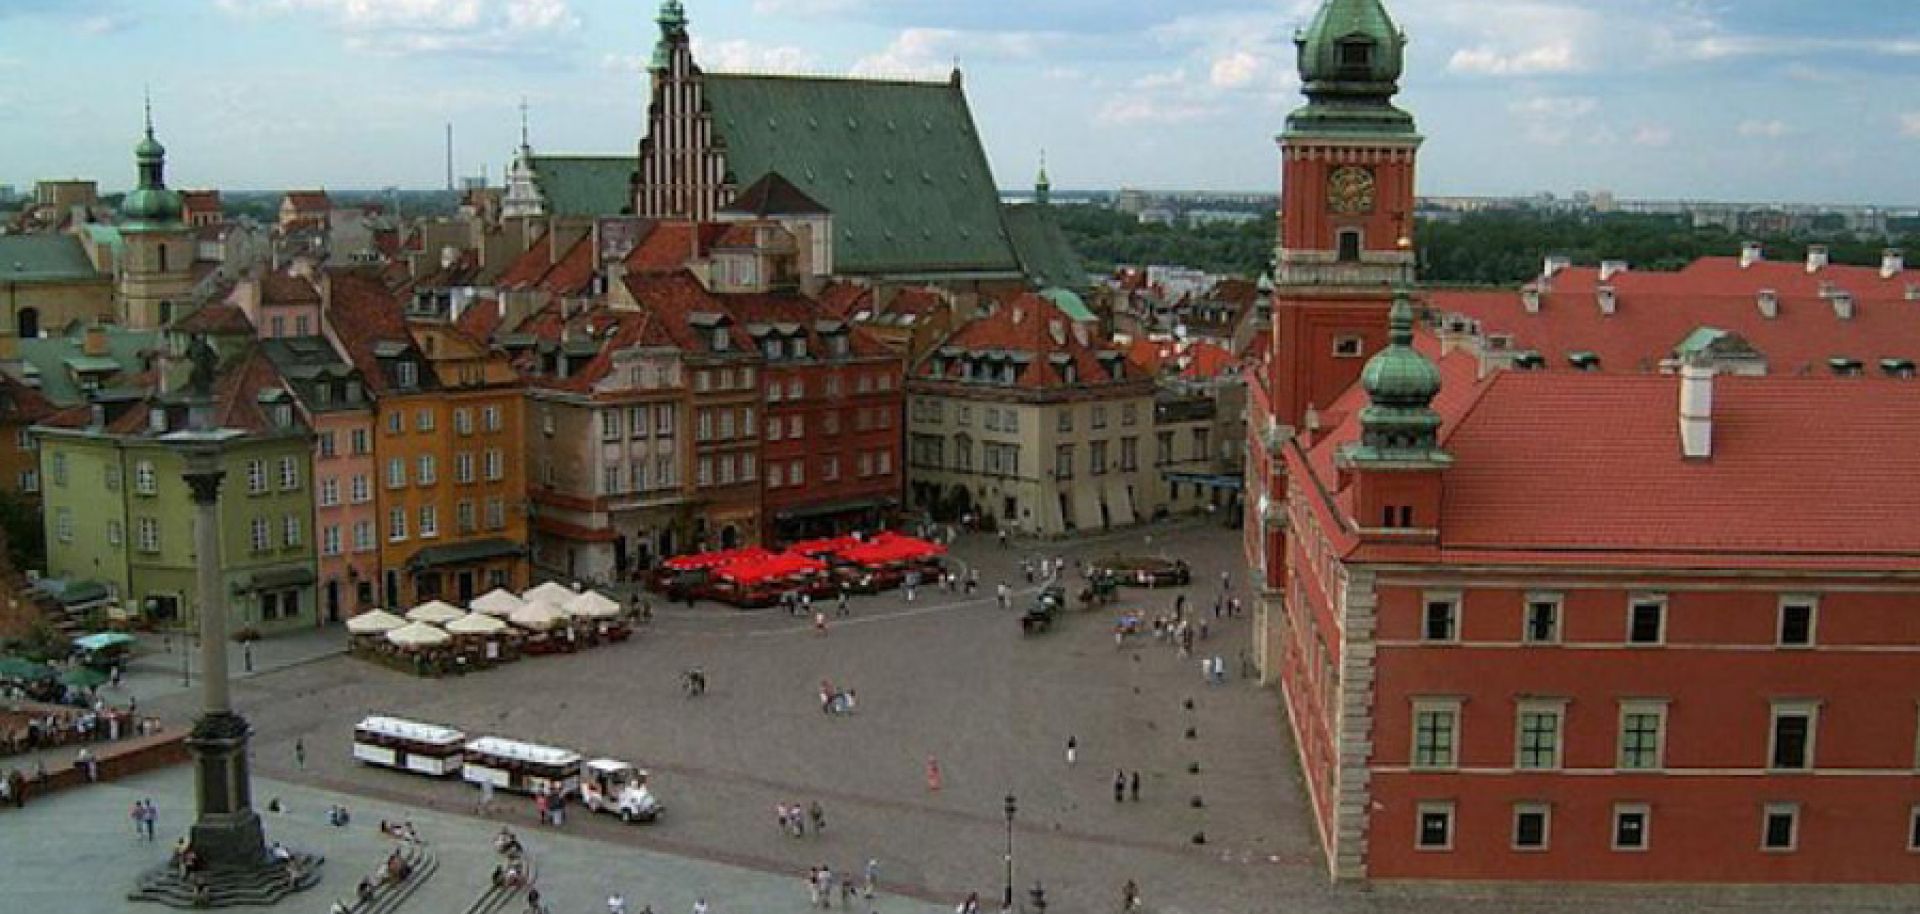 Poland's Capital Reveals Deeper Truths